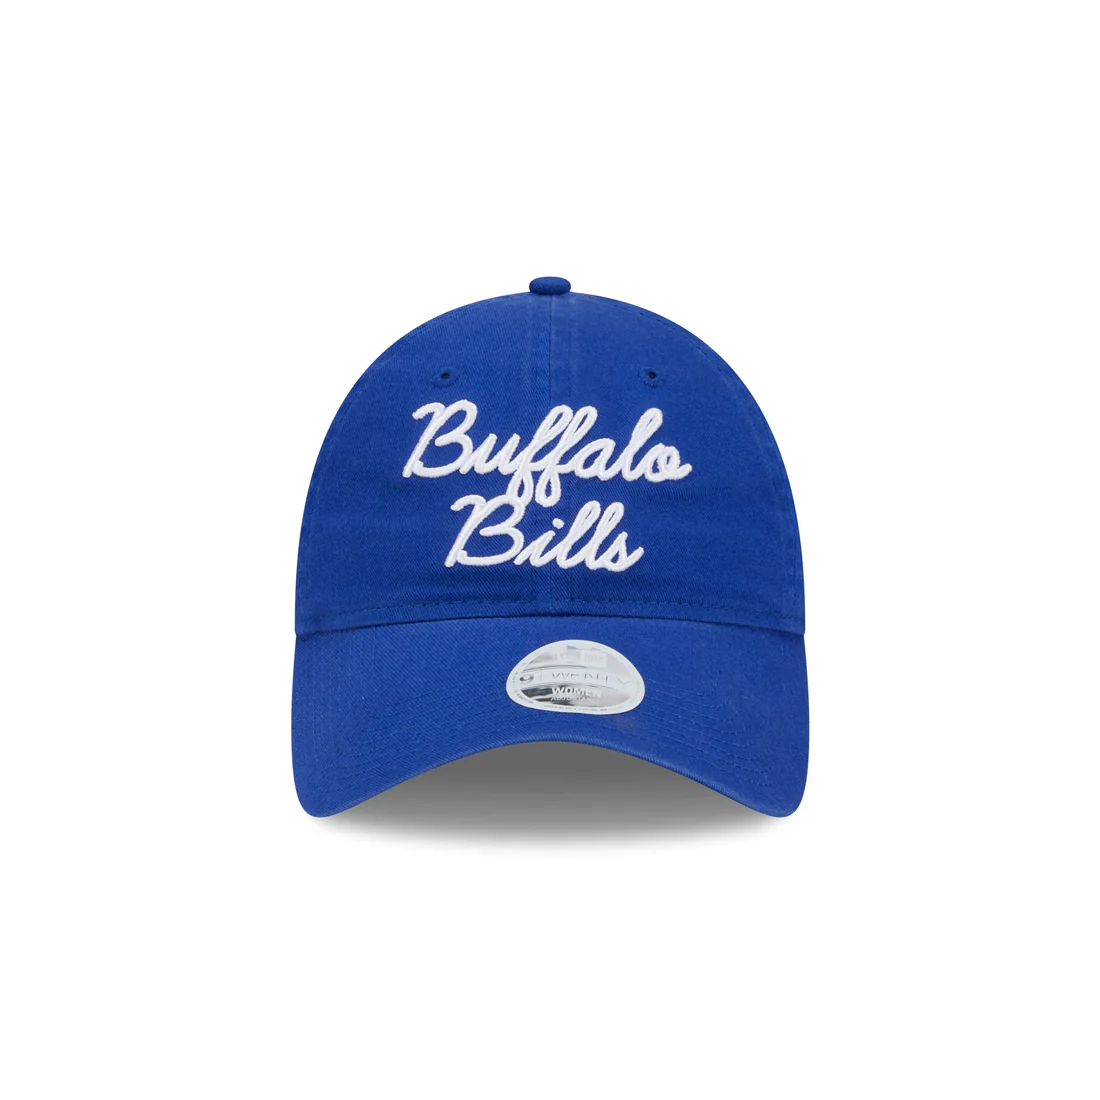 Buffalo Bills Throwback Women's 9TWENTY Adjustable Hat, Blue, NFL by New Era